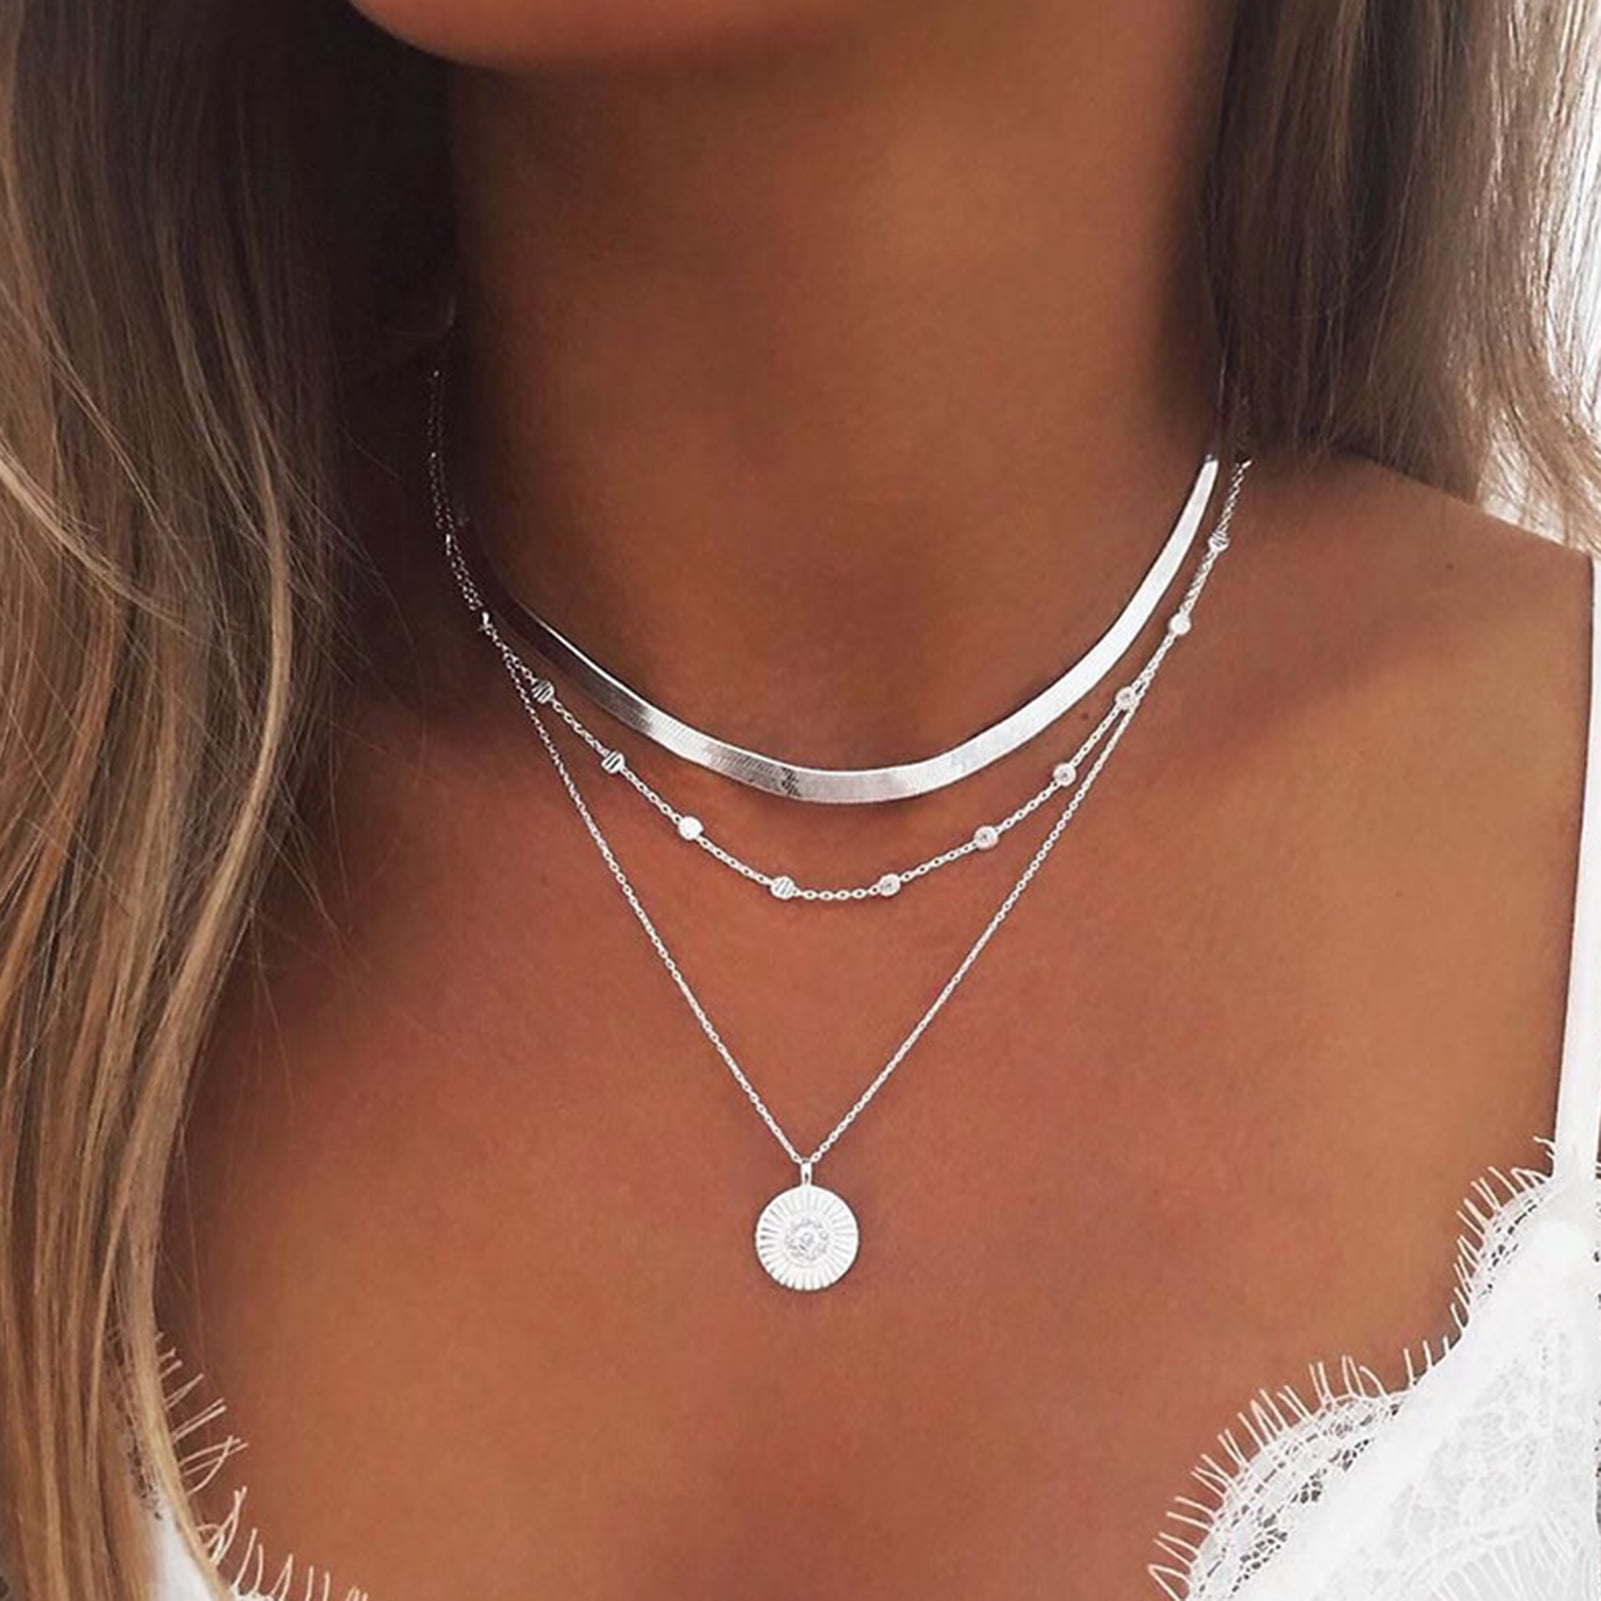 Buy EXGOX Layered Choker Necklace Pendant Dainty Mini Loose and Tiny Chokers  Layered Circle Necklace Bar Y Pendant 14K Real Gold Plated Necklace For  Women at Amazon.in